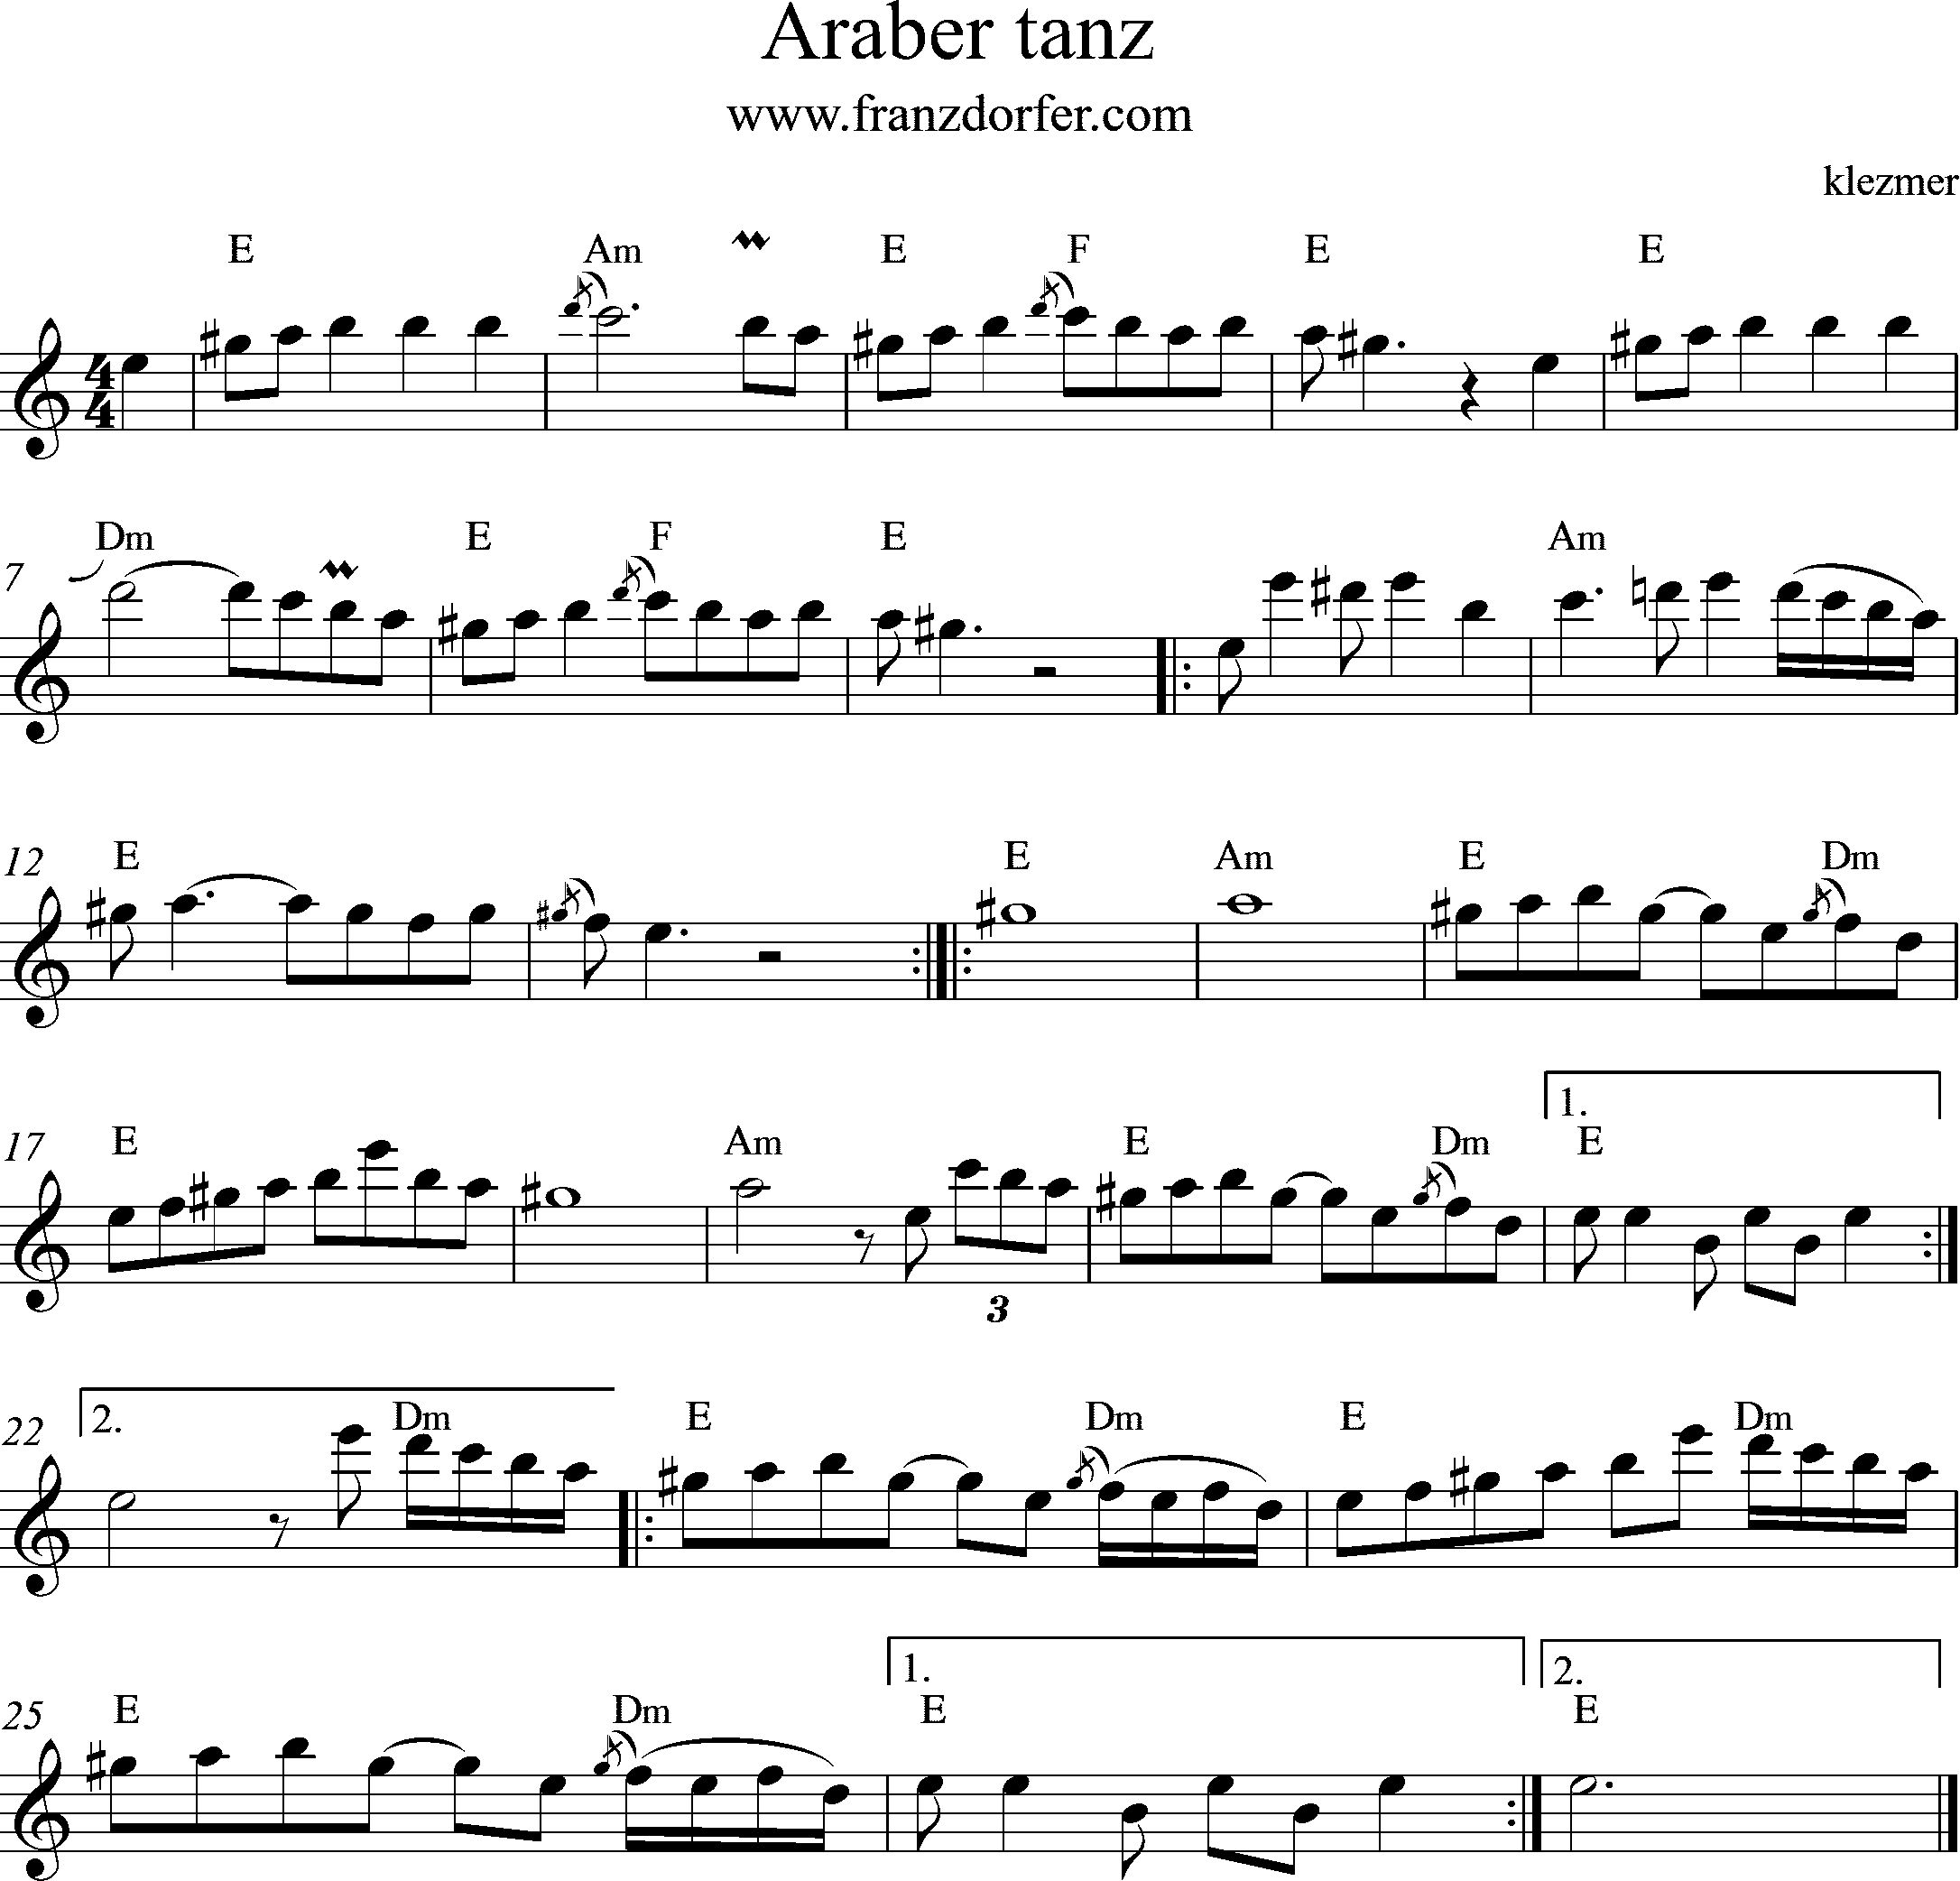 sheetmusic Araber tanz -2